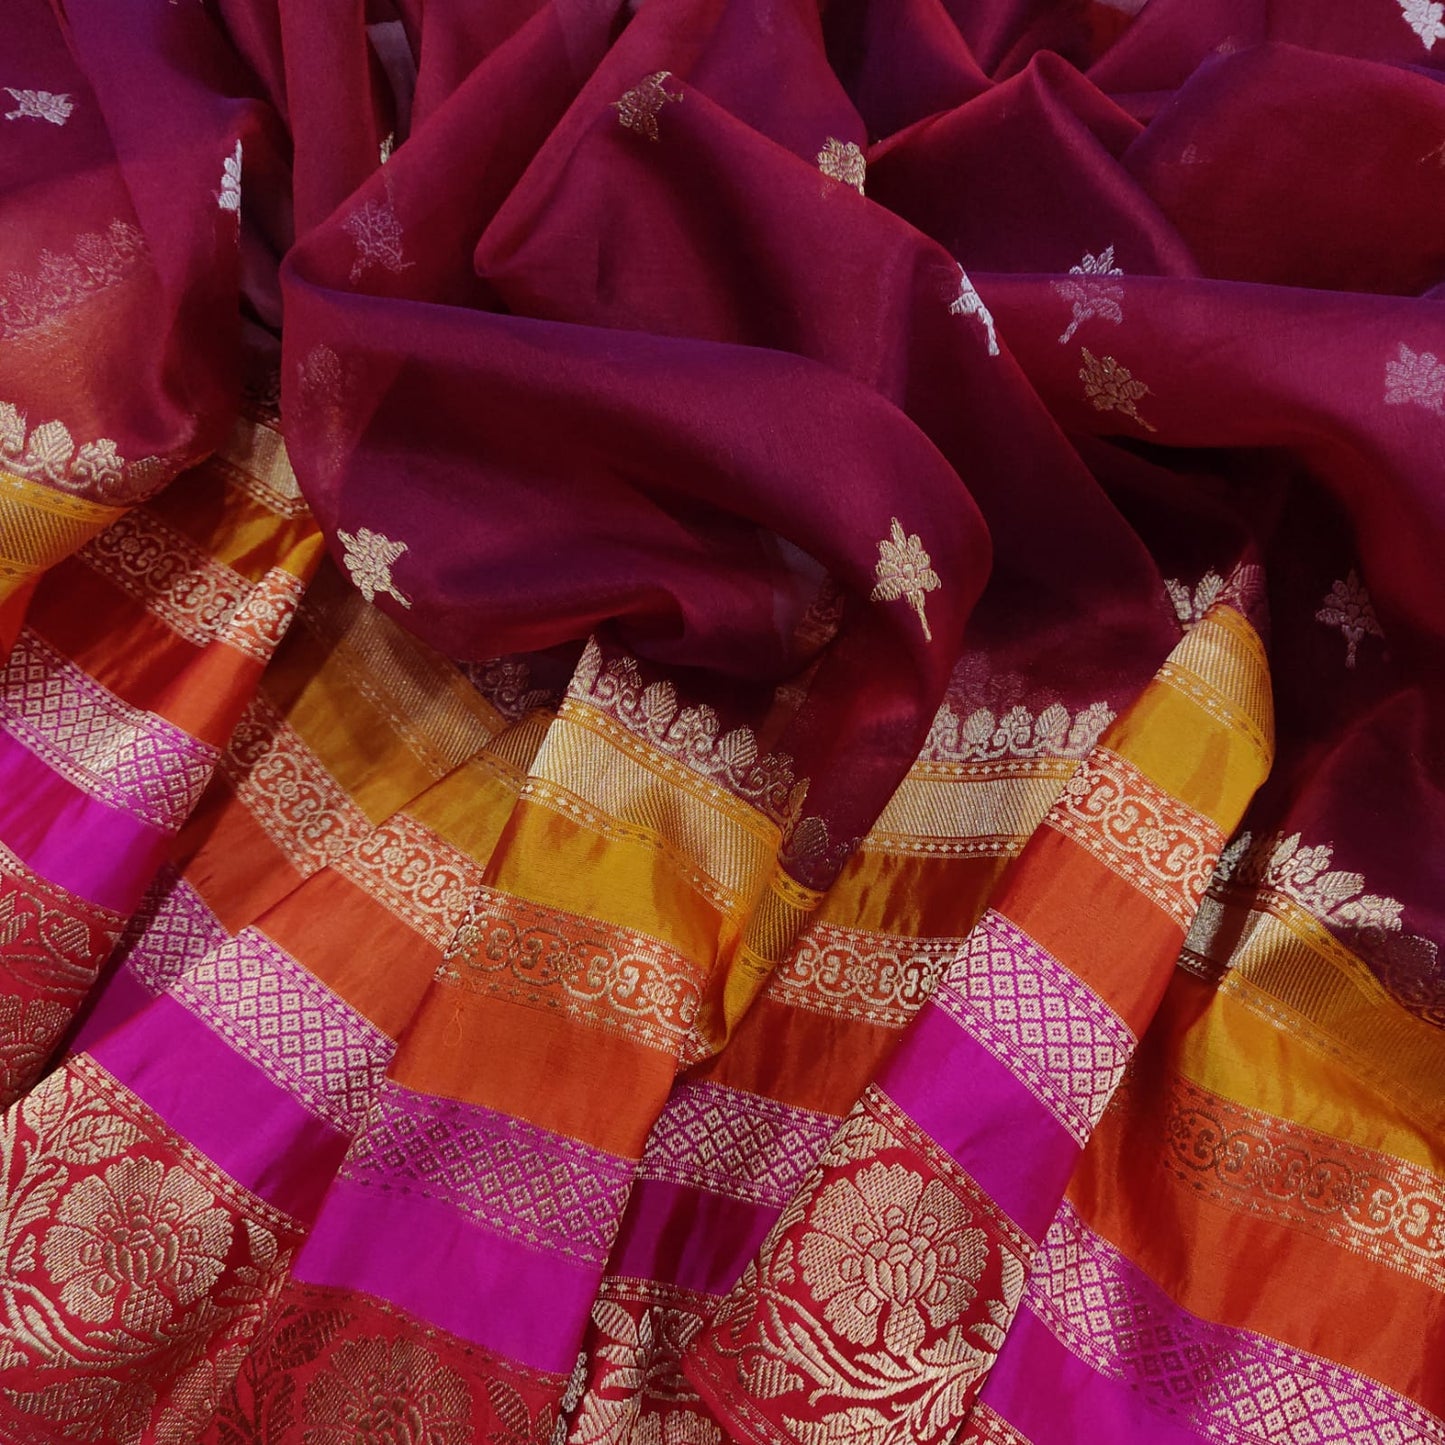 Aliva Kora Indian sari